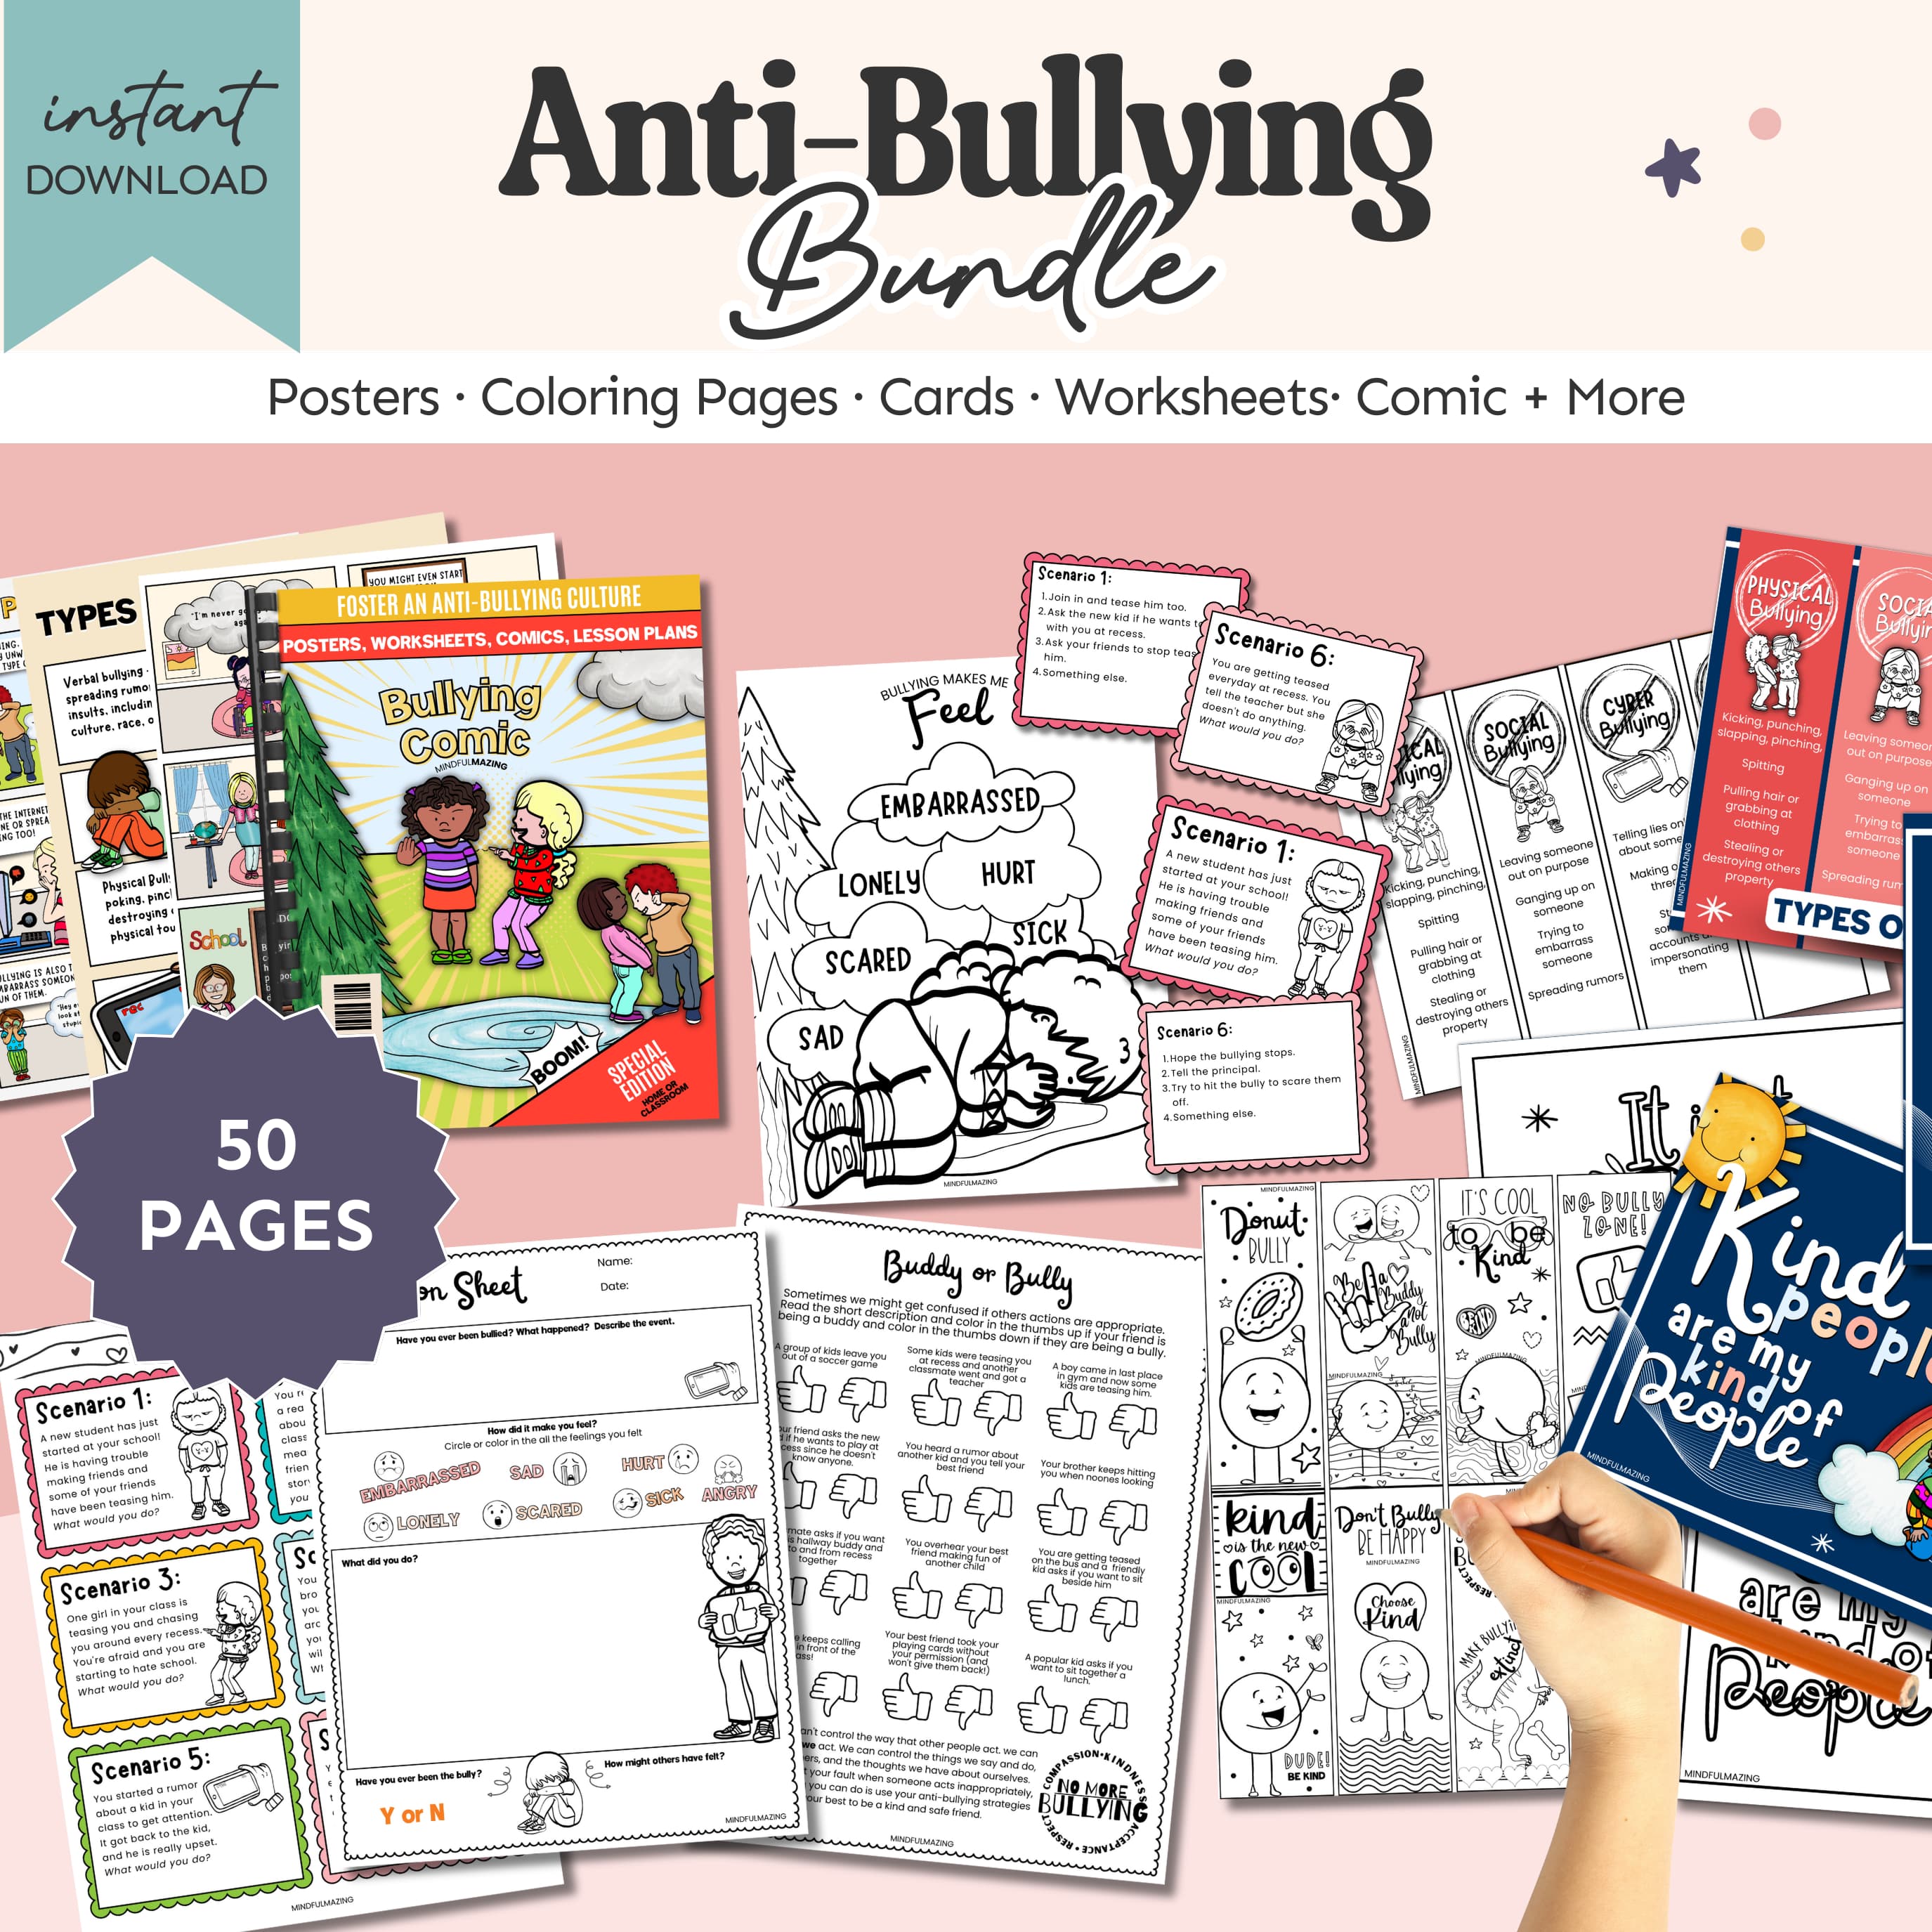 Anti-Bullying Comic Book + Activities